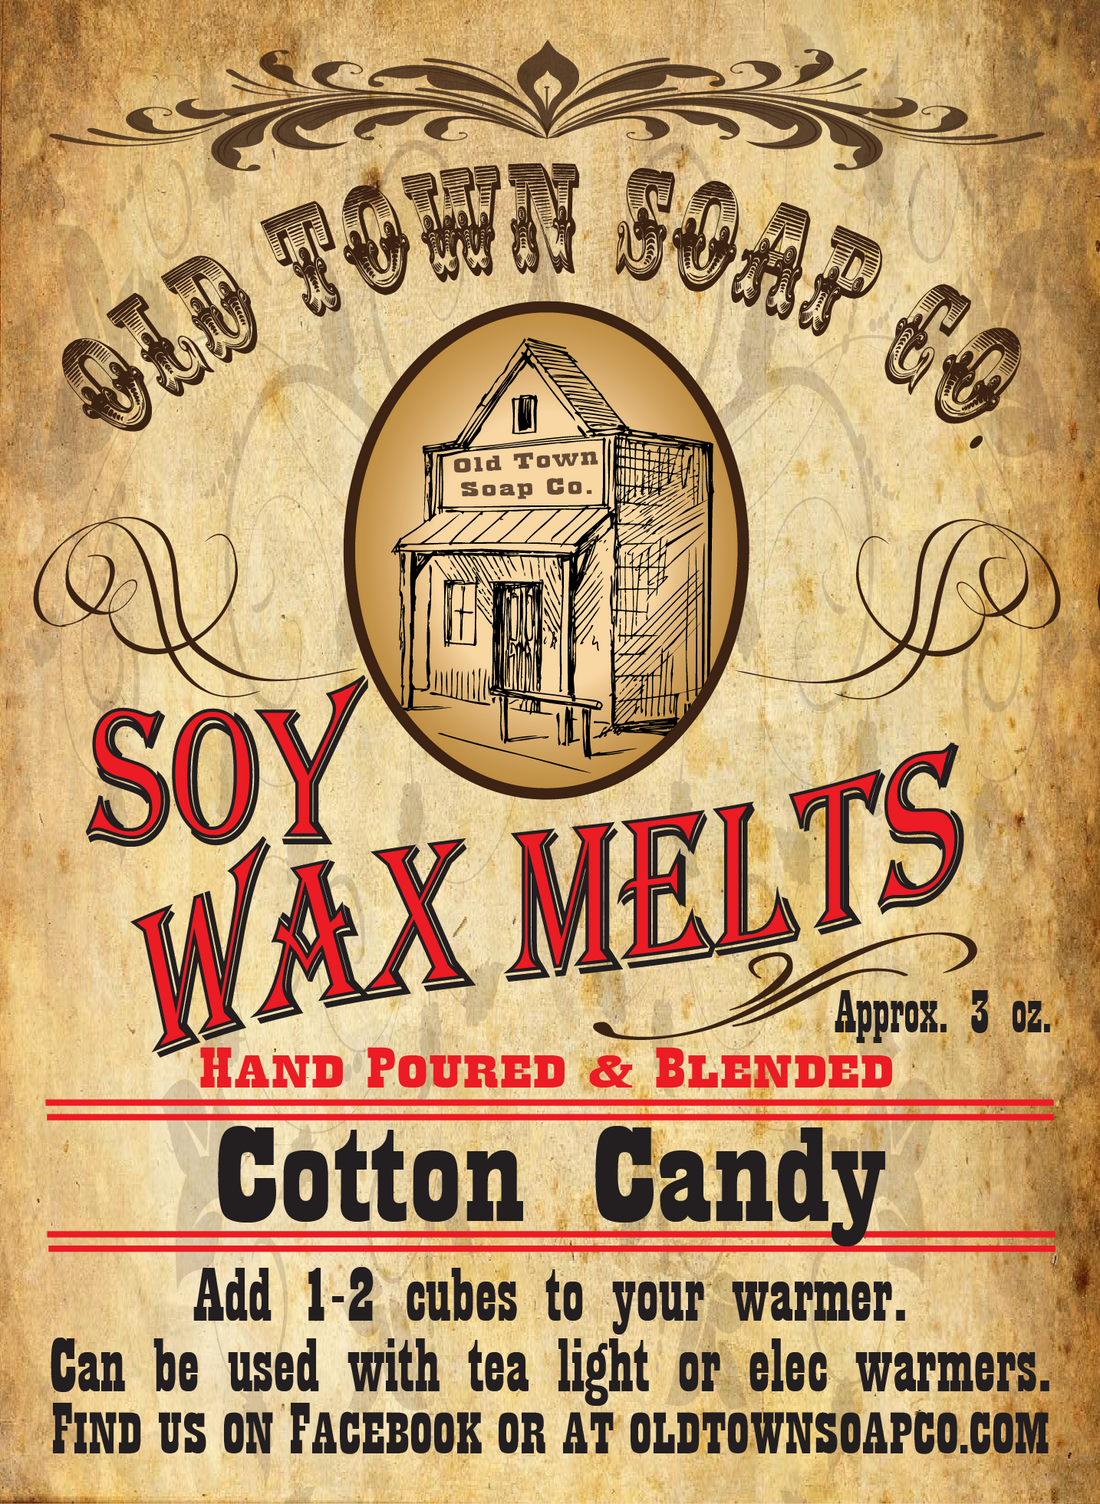 Cotton Candy Wax Melts